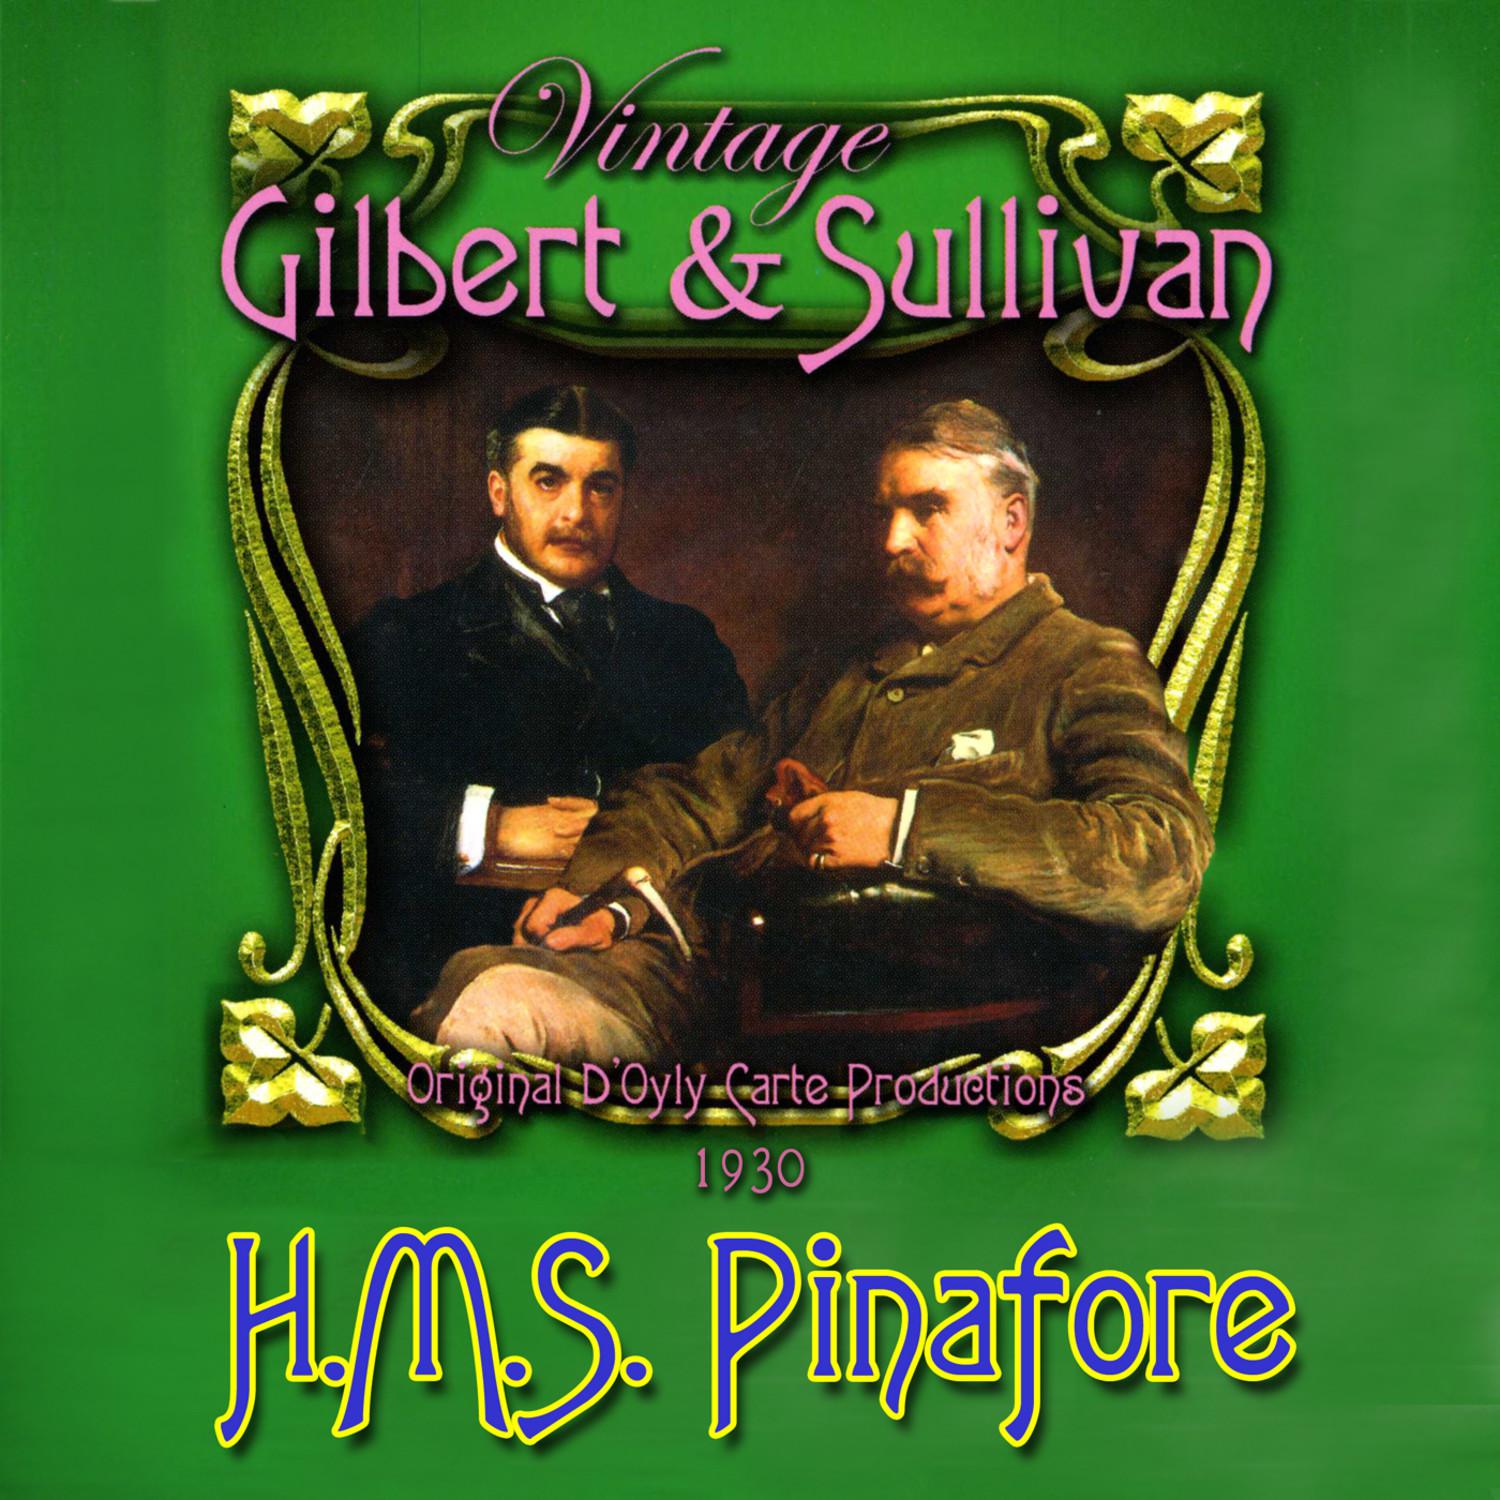 Gilbert & Sullivan - H.M.S.Pinafore (1930)